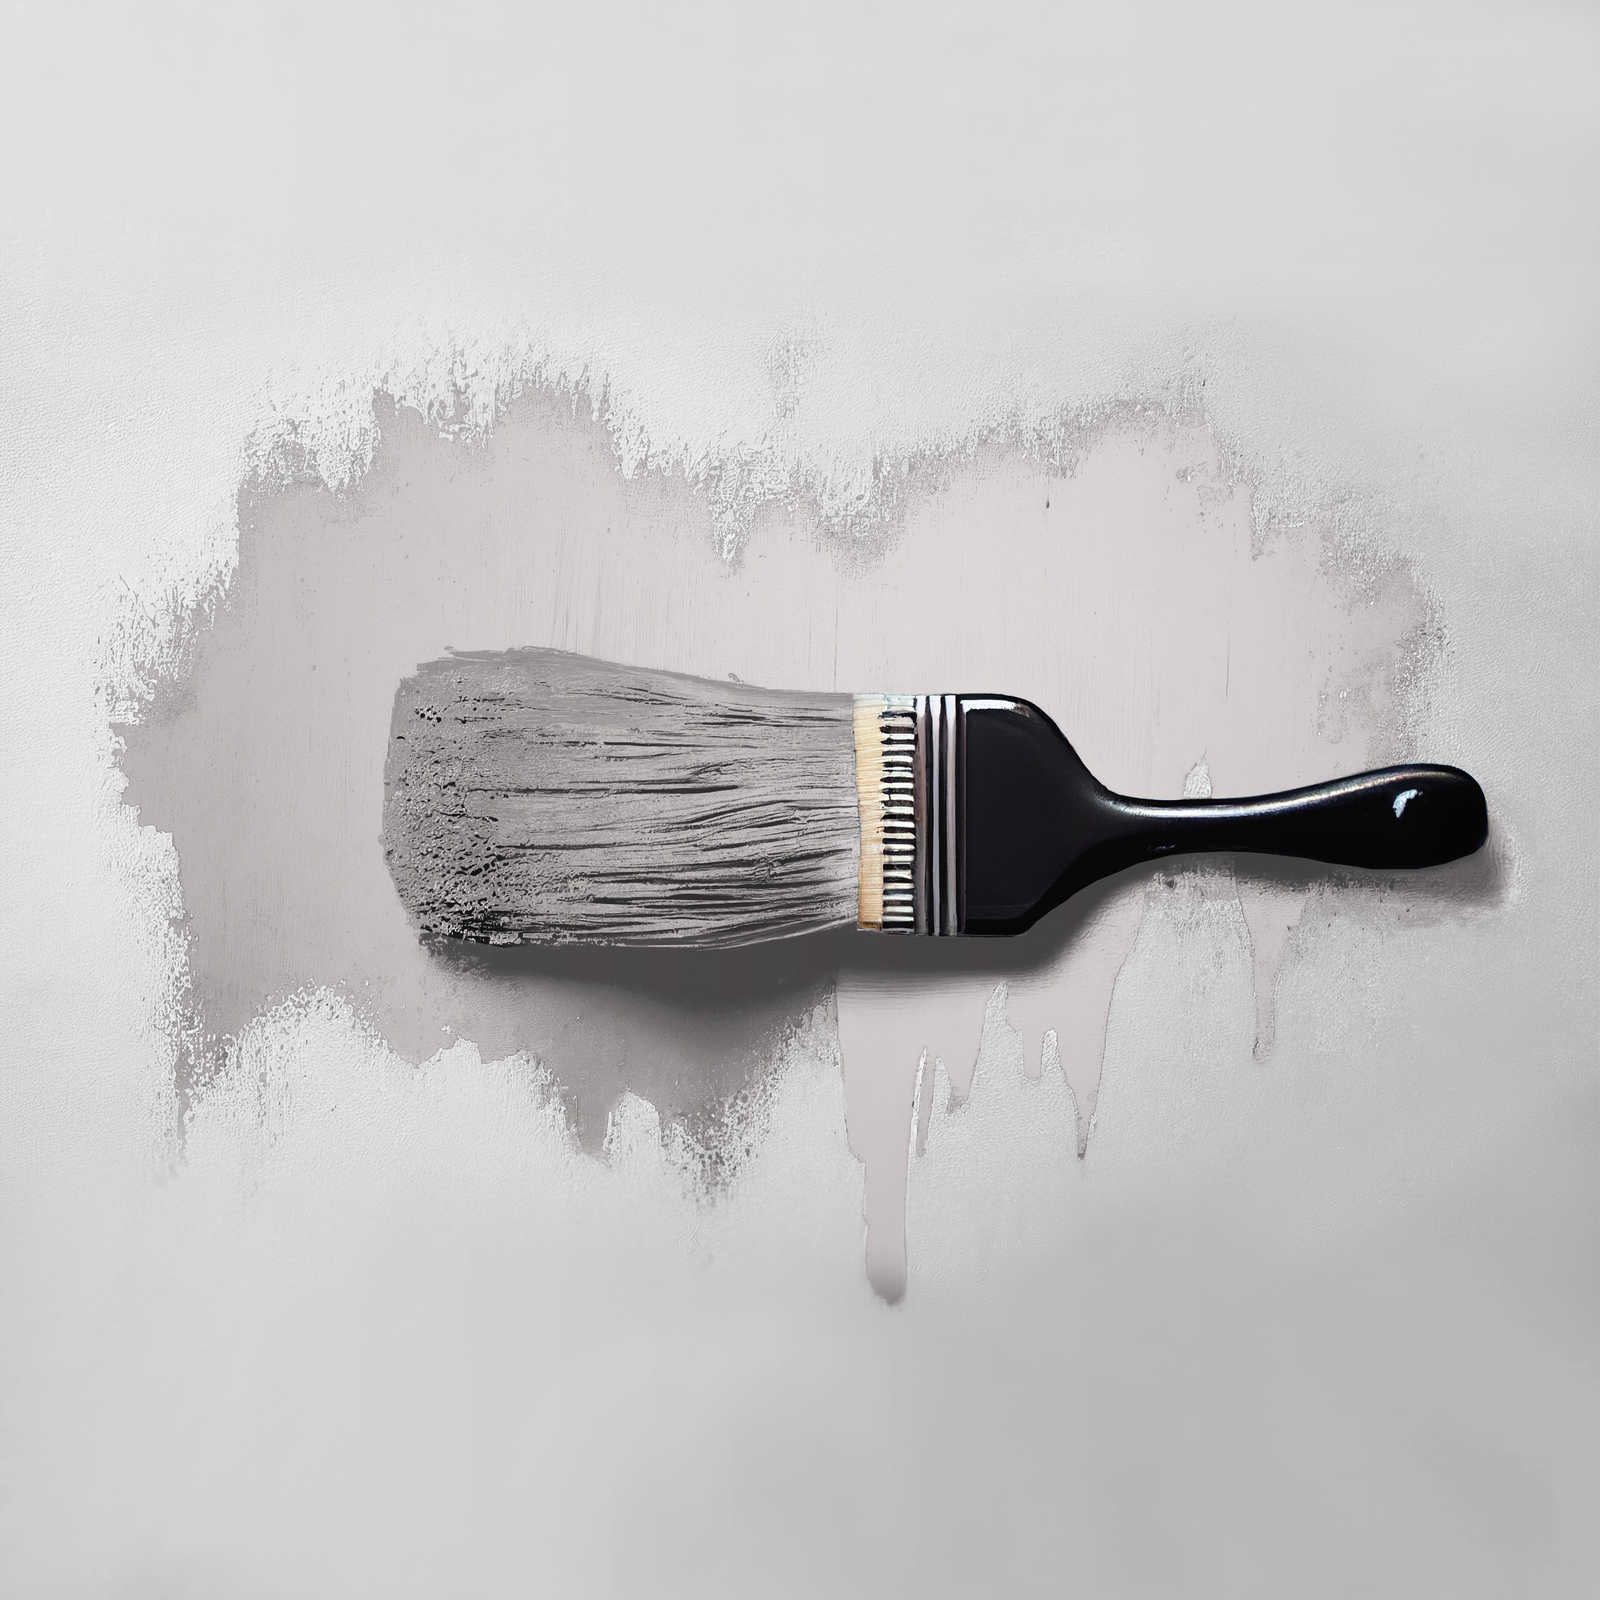             Wall Paint TCK2001 »Salty Shrimp« in warm light grey – 2.5 litre
        